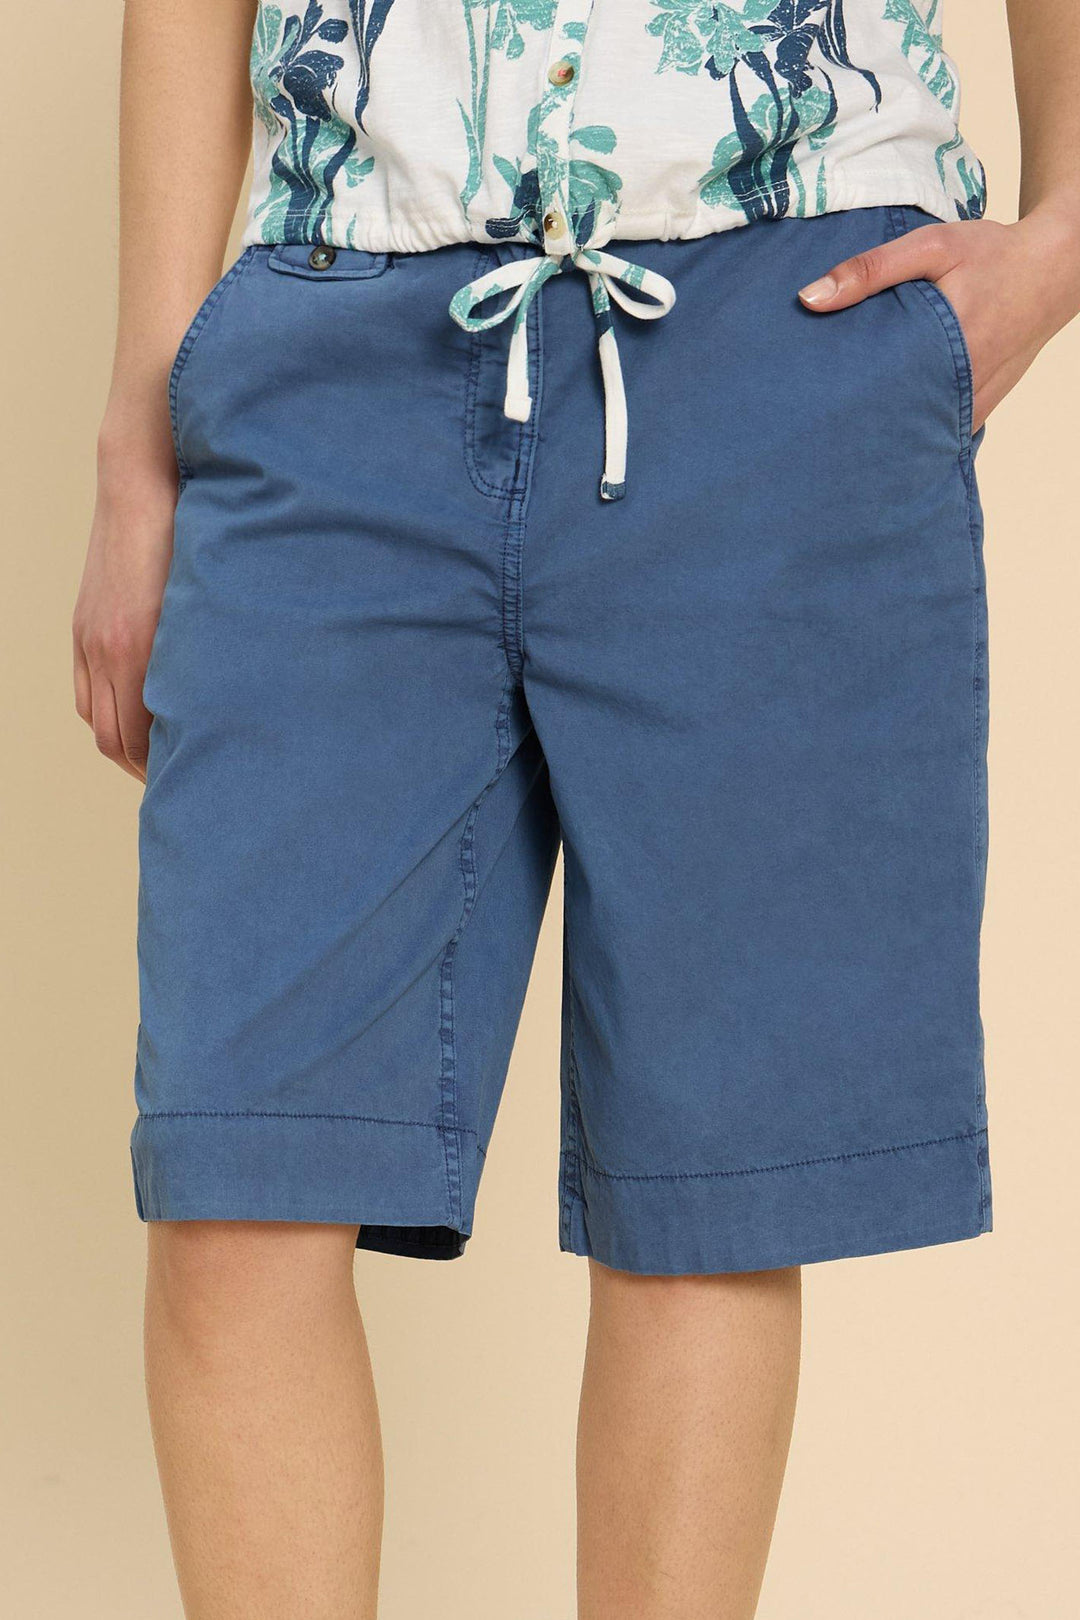 White Stuff 440946 Hayley Mid Blue Organic Chino Shorts - Shirley Allum Boutique